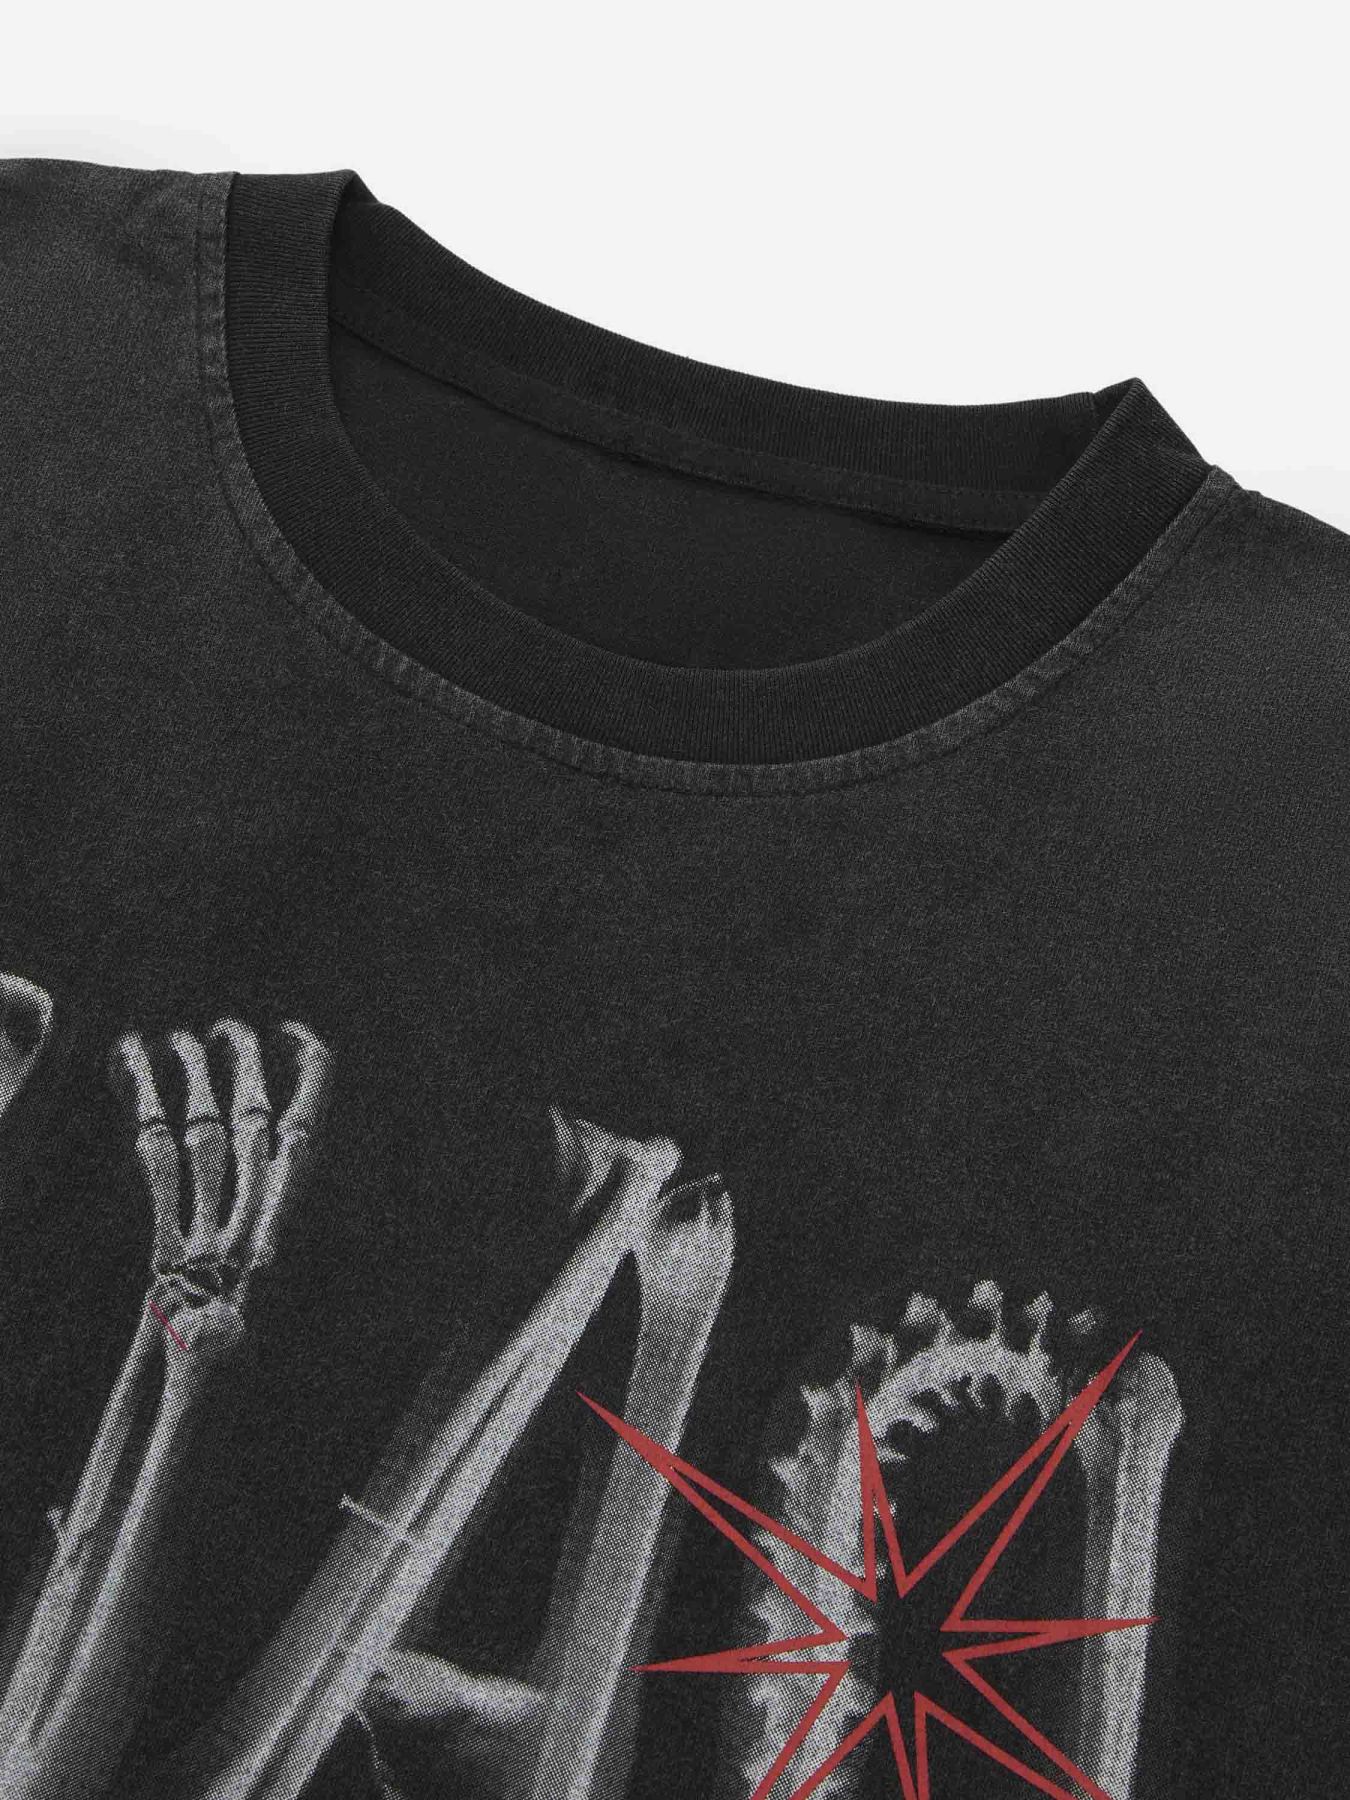 The Supermade Skull Print T-Shirt